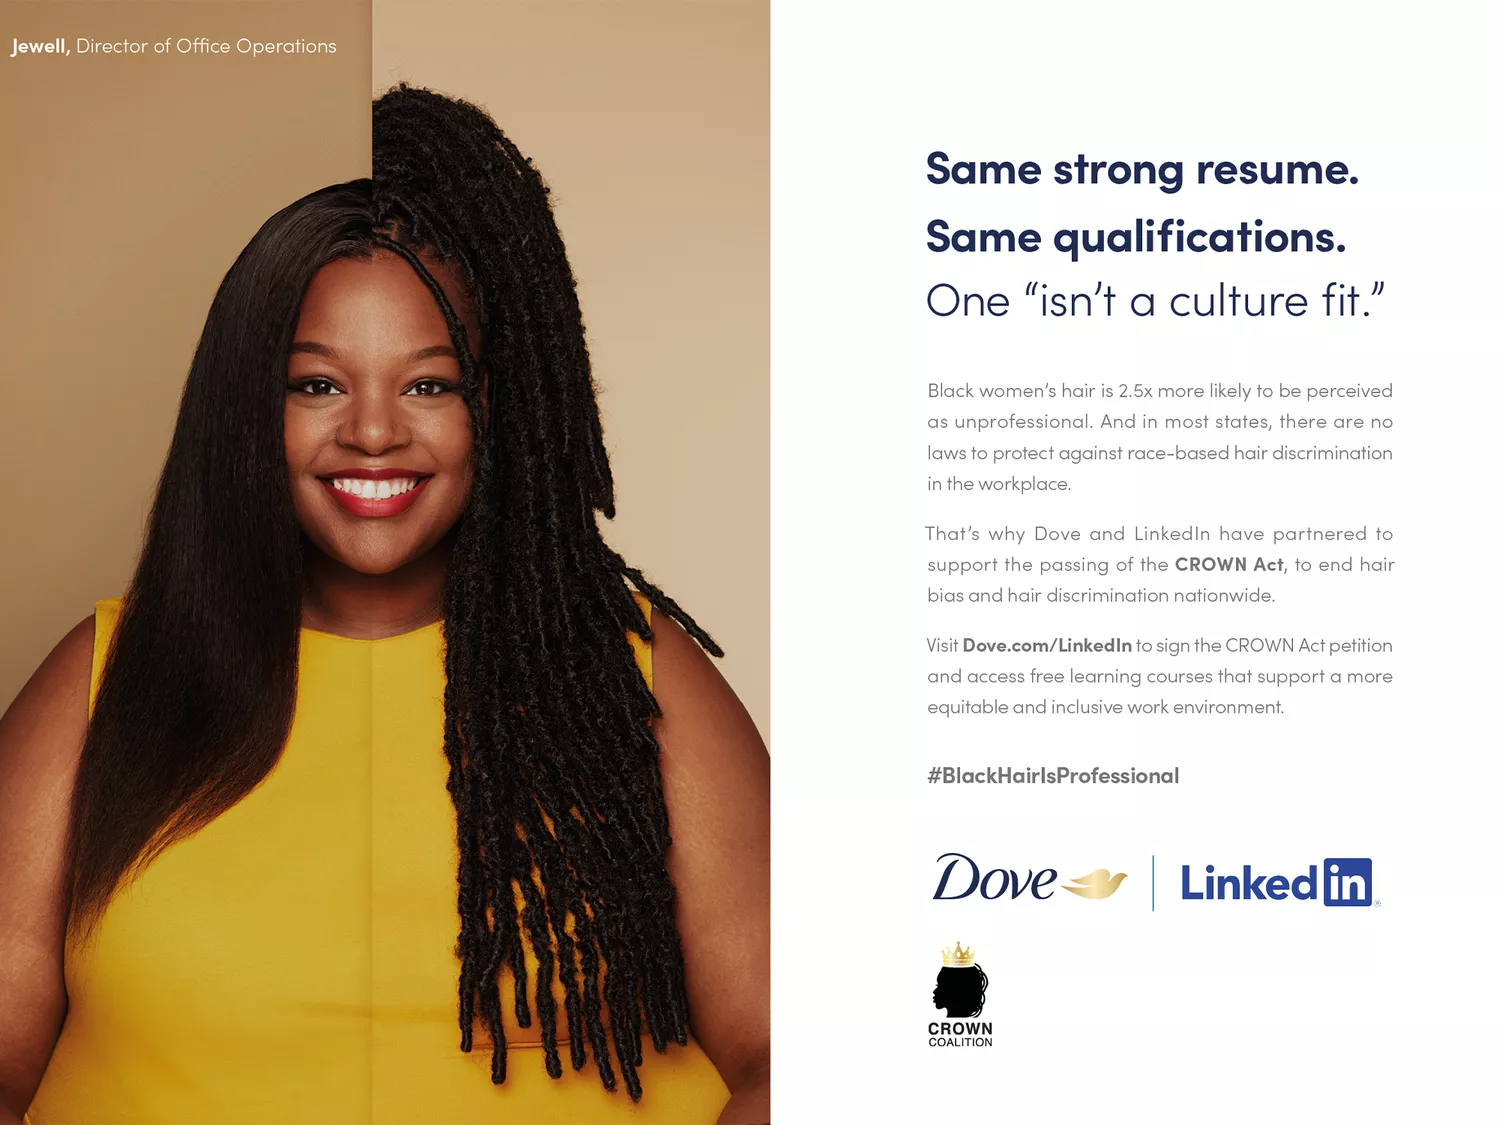 Dove and LinkedIn #BlackHairIsProfessional campaign